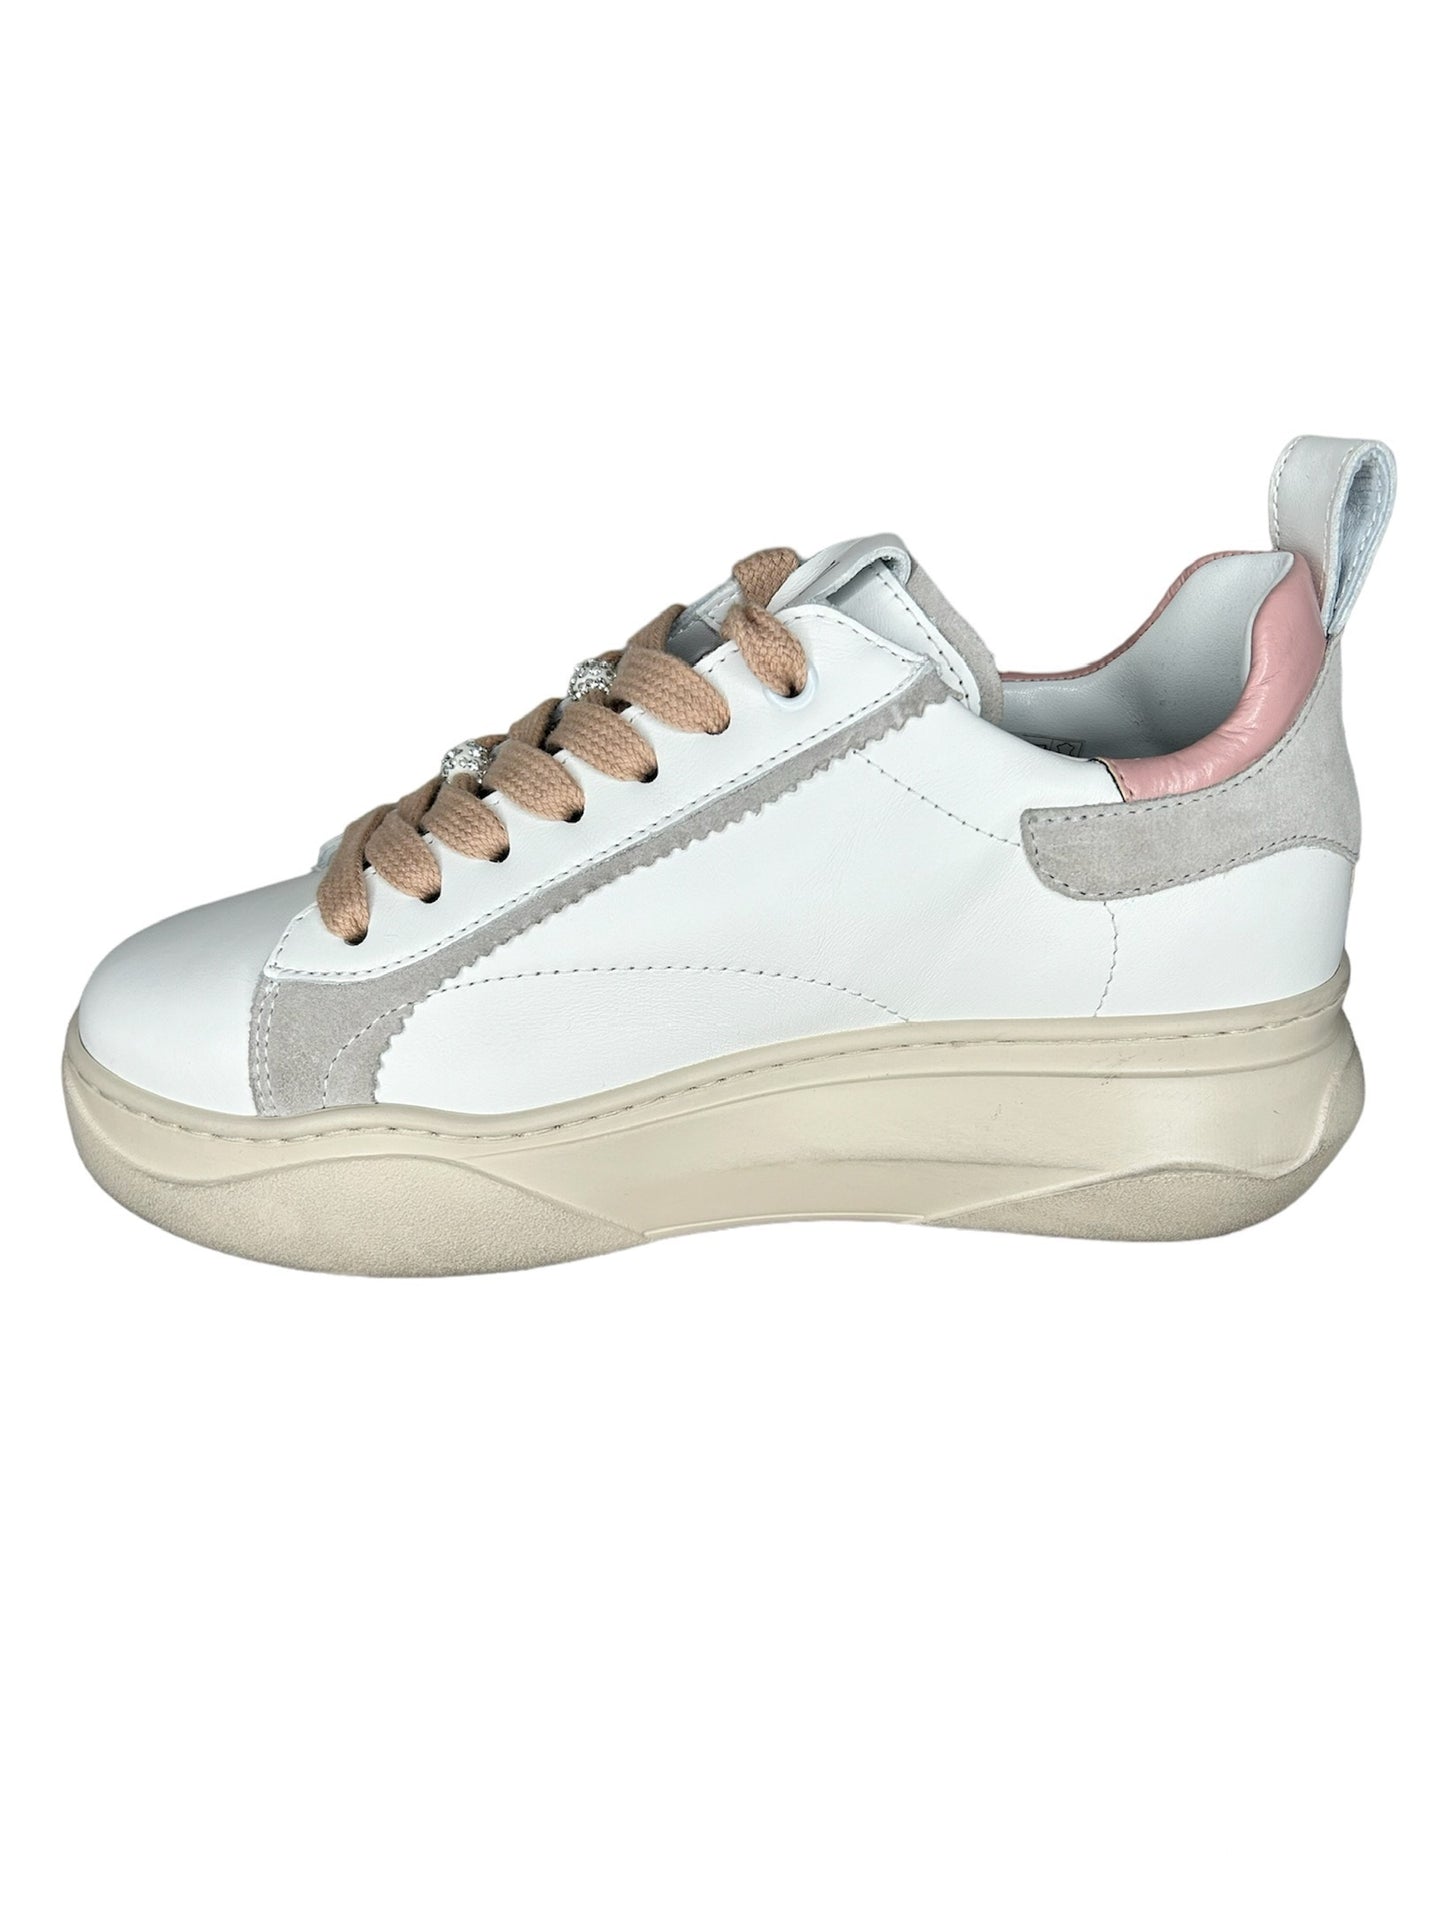 GIO+ Sneakers Giada pink